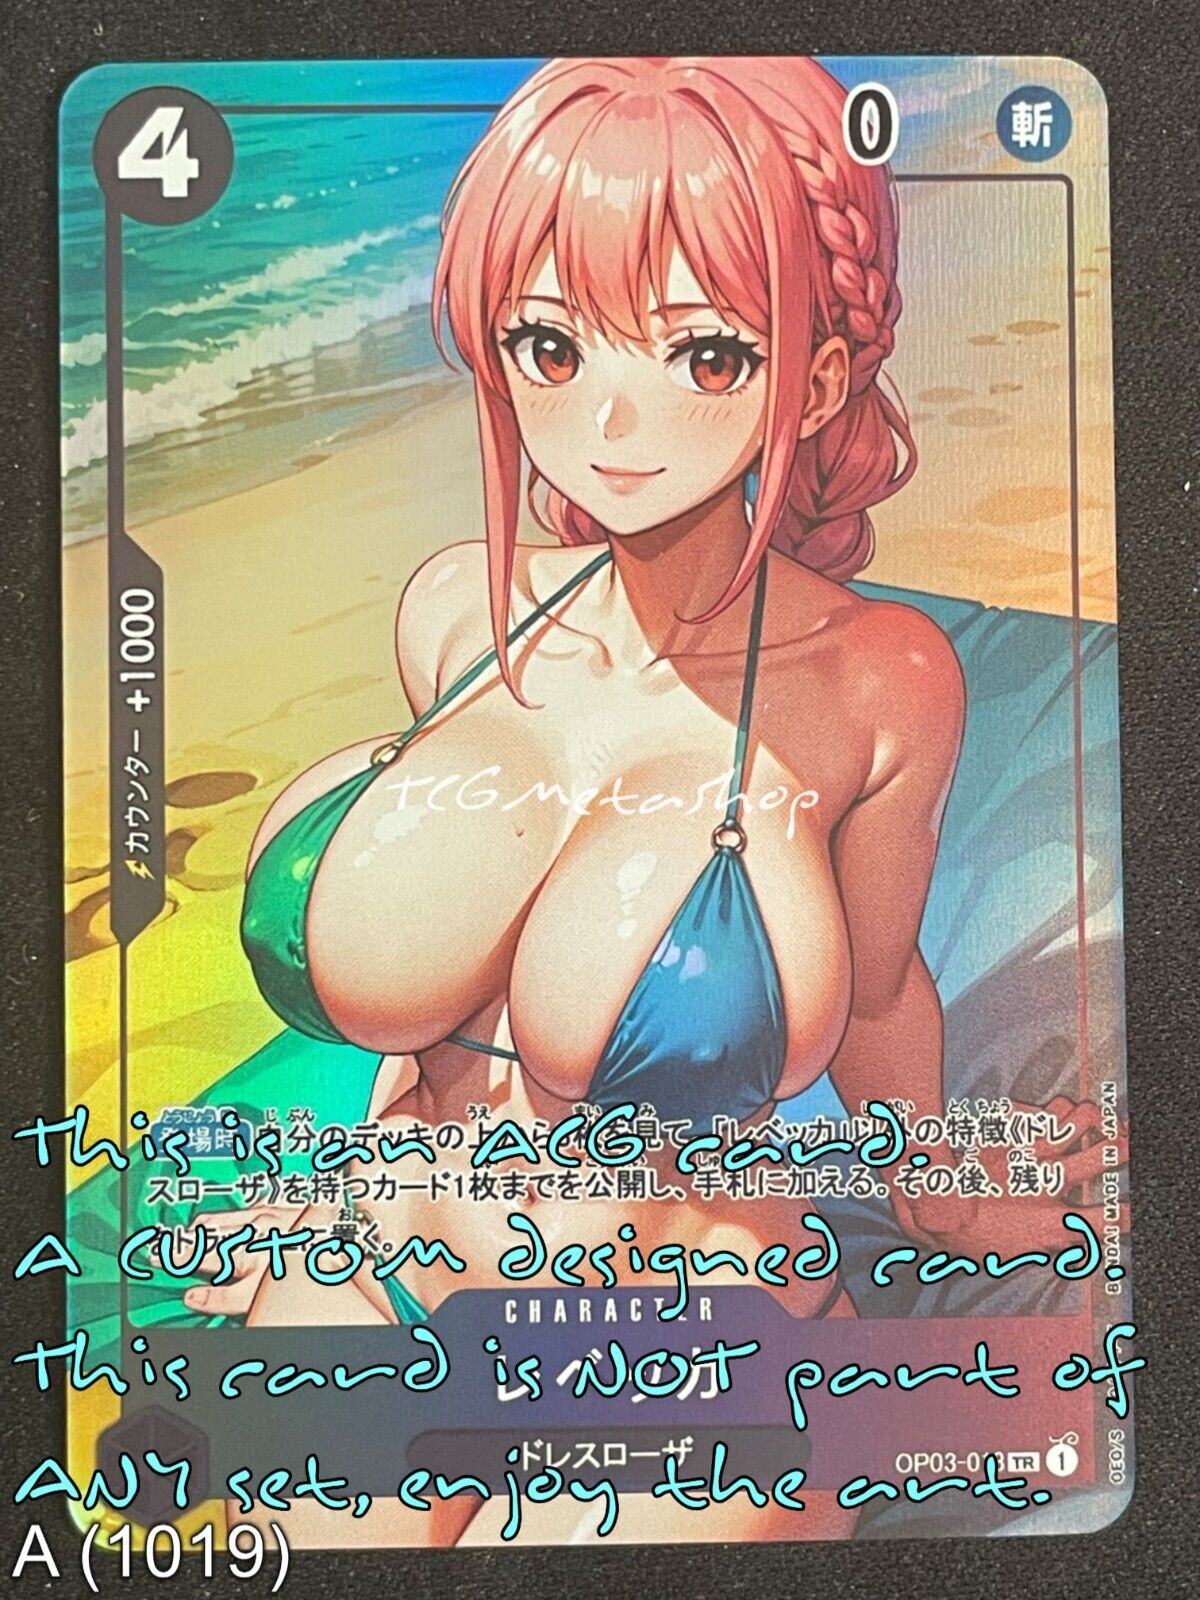 🔥 A 1019 Rebecca One Piece Goddess Story Anime Waifu Card ACG 🔥